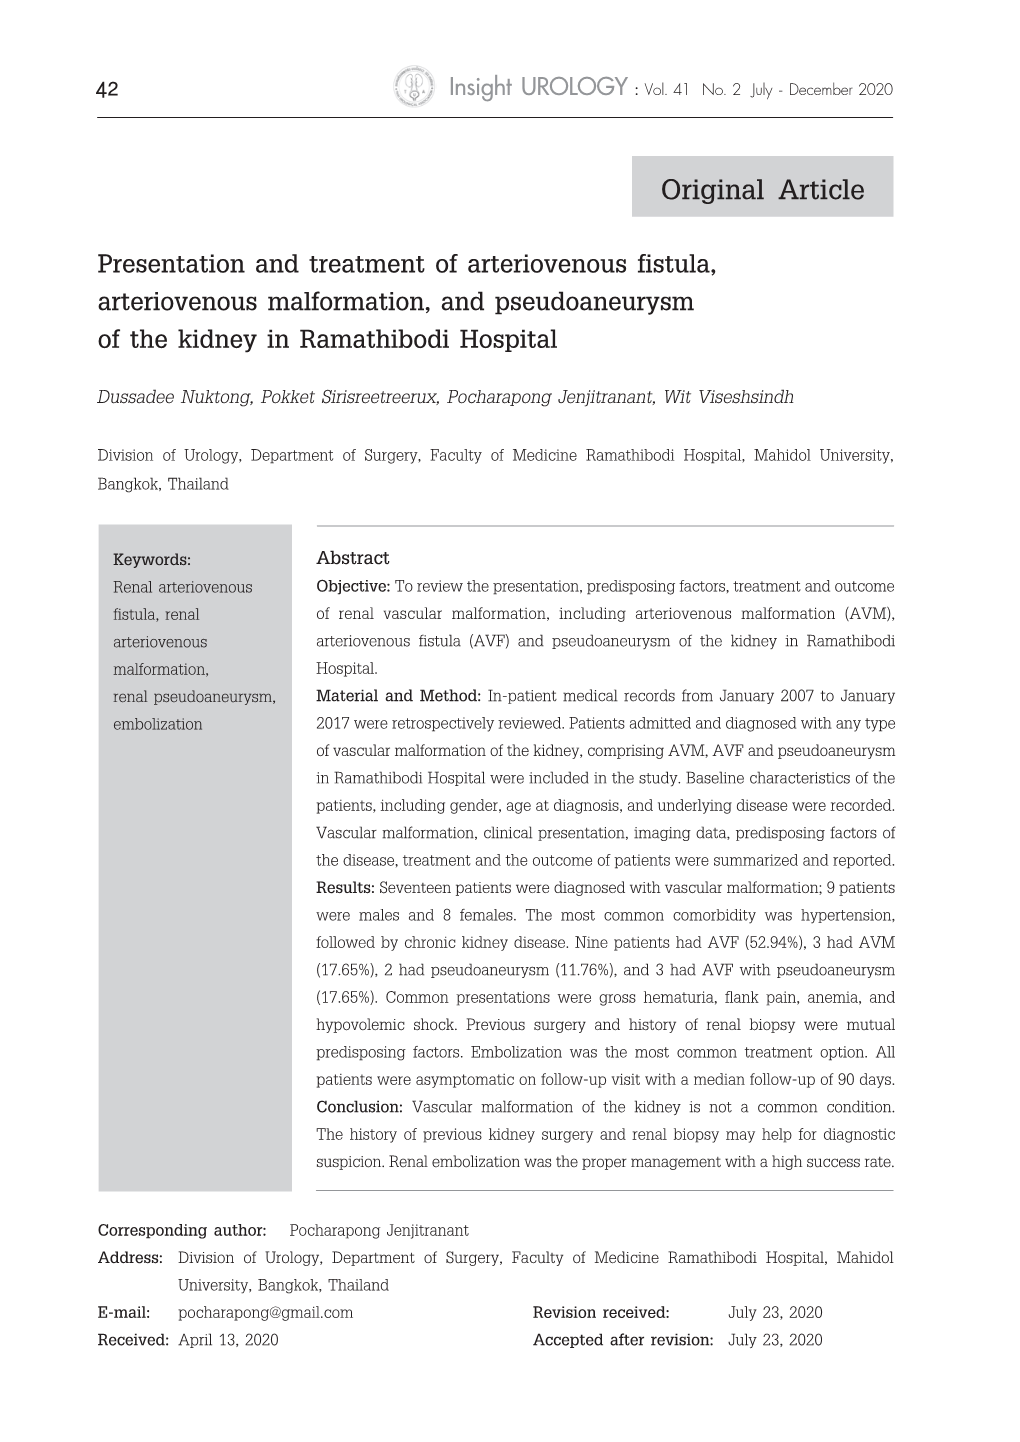 Presentation and Treatment of Arteriovenous Fistula, Arteriovenous Malformation, and Pseudoaneurysm of the Kidney in Ramathibodi Hospital